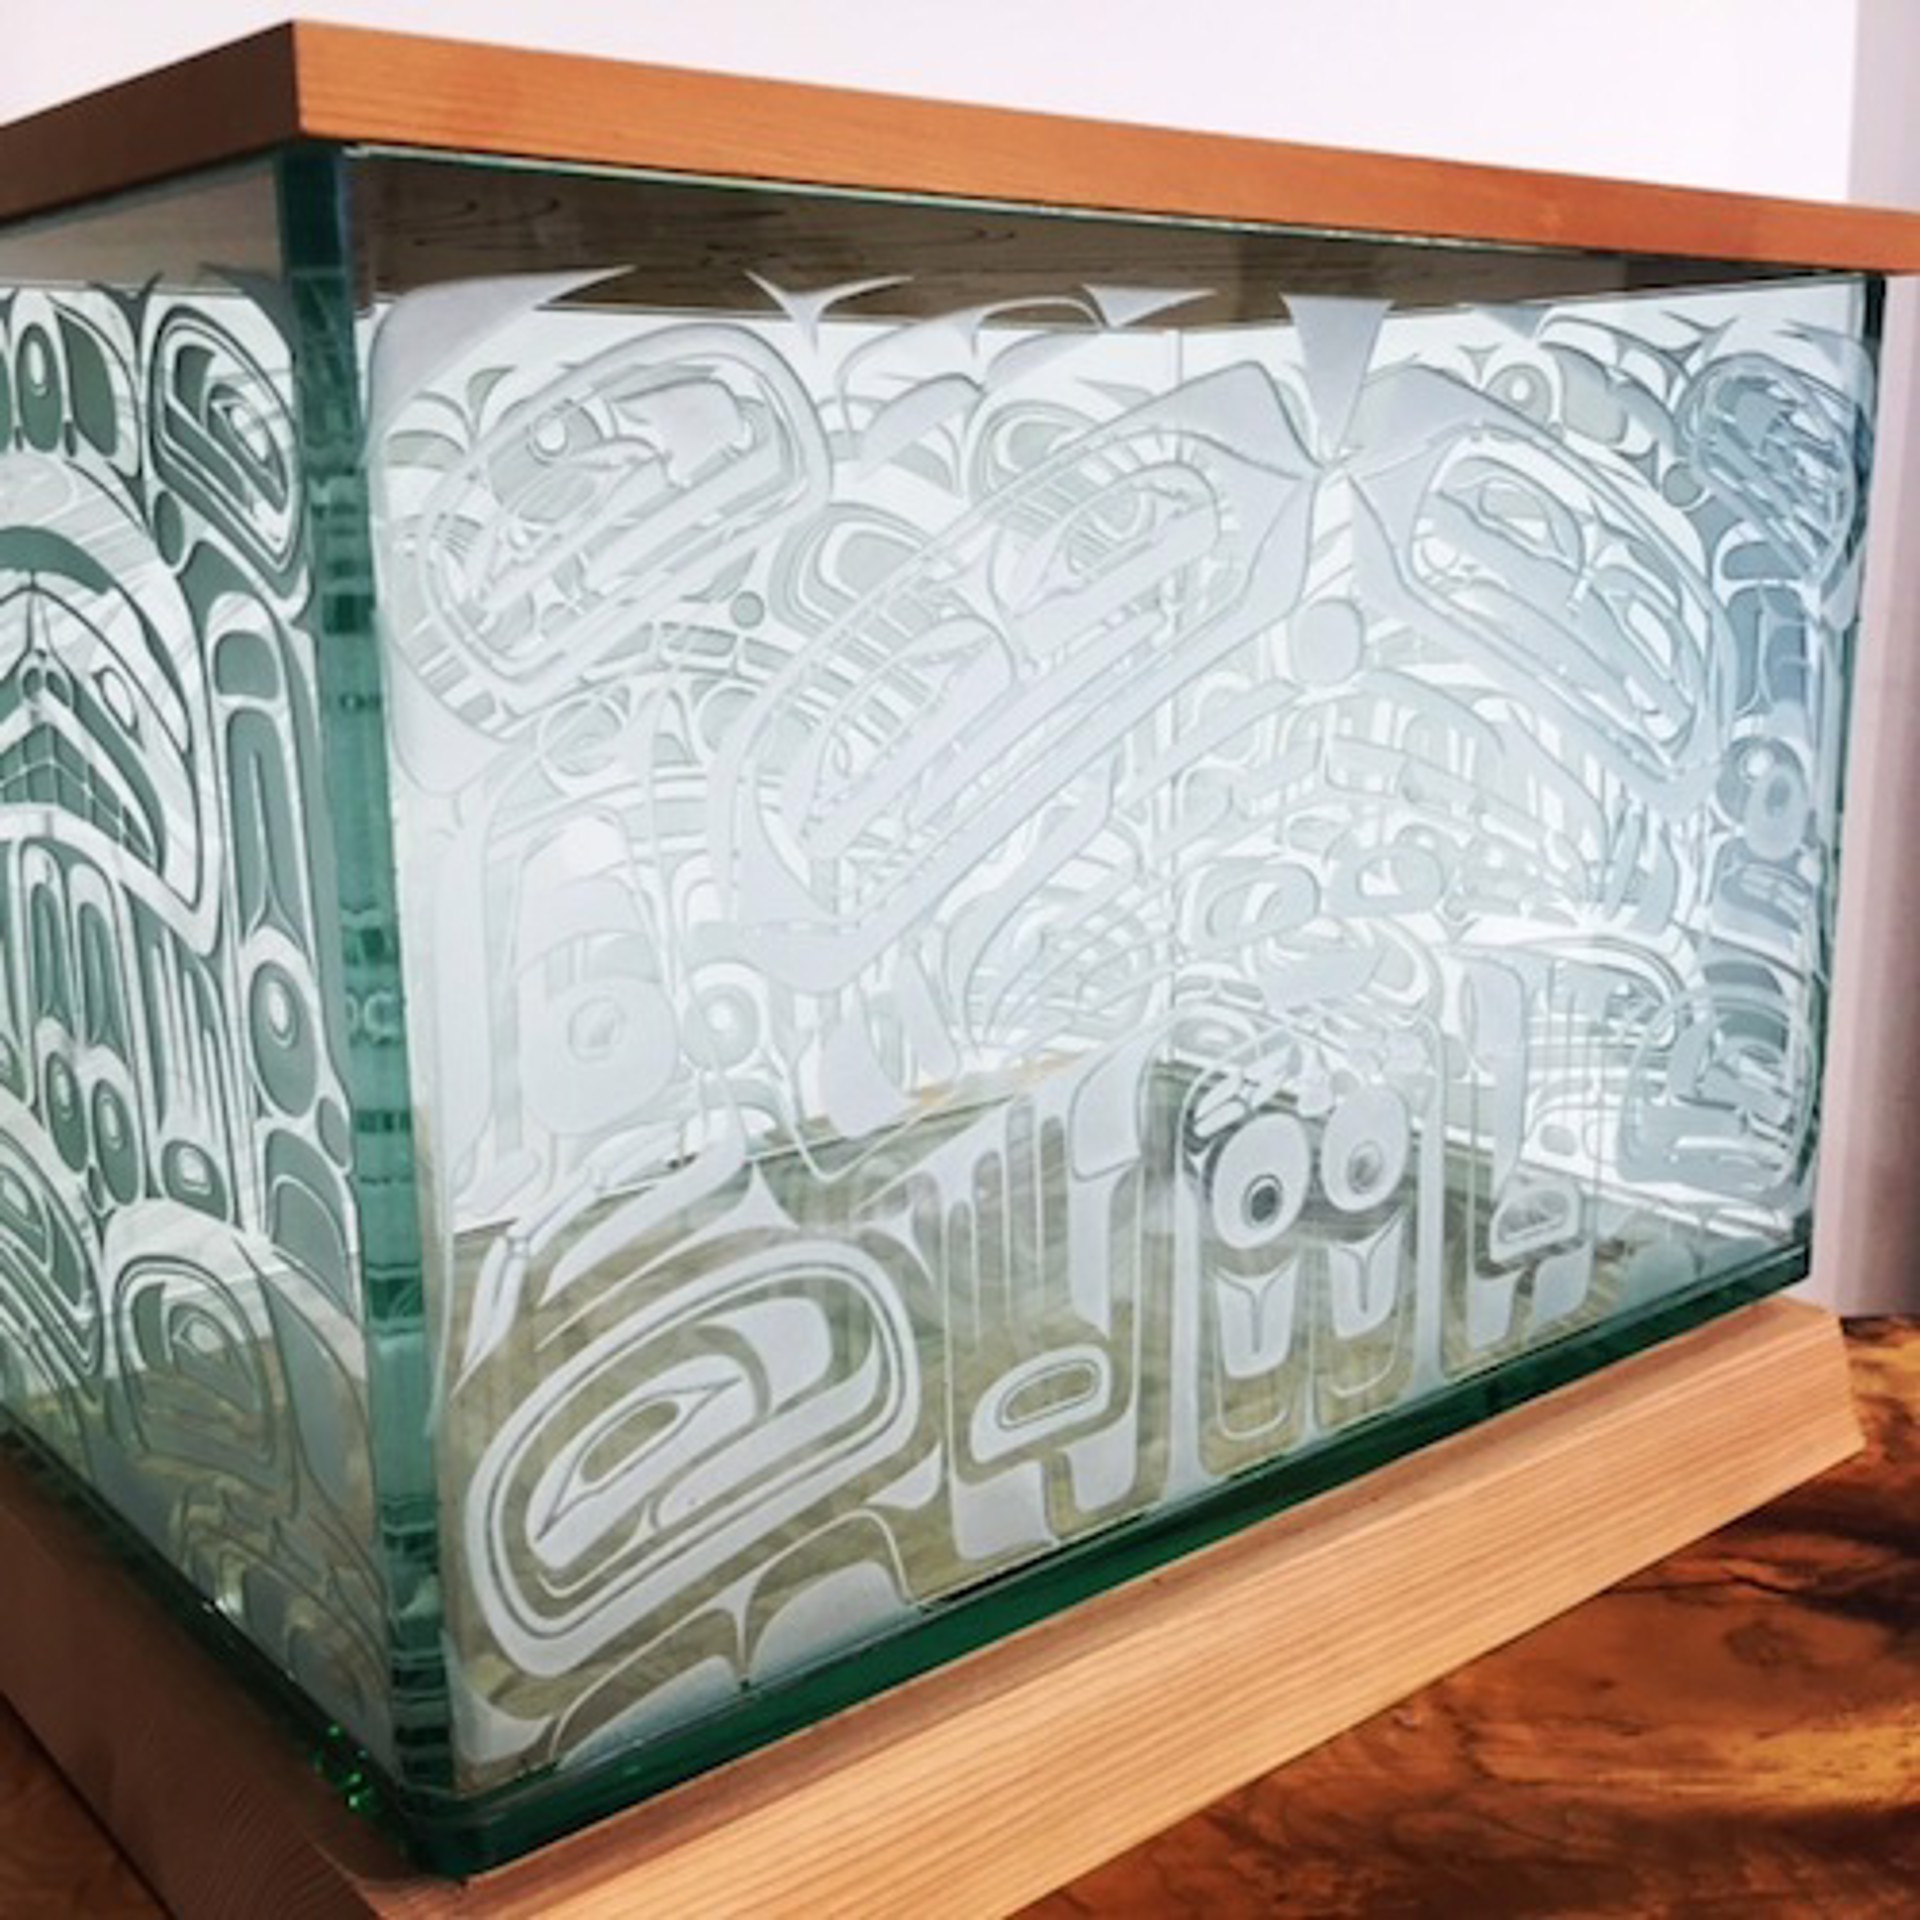 Glass Etched Bent wood Box by Alano Edzerza